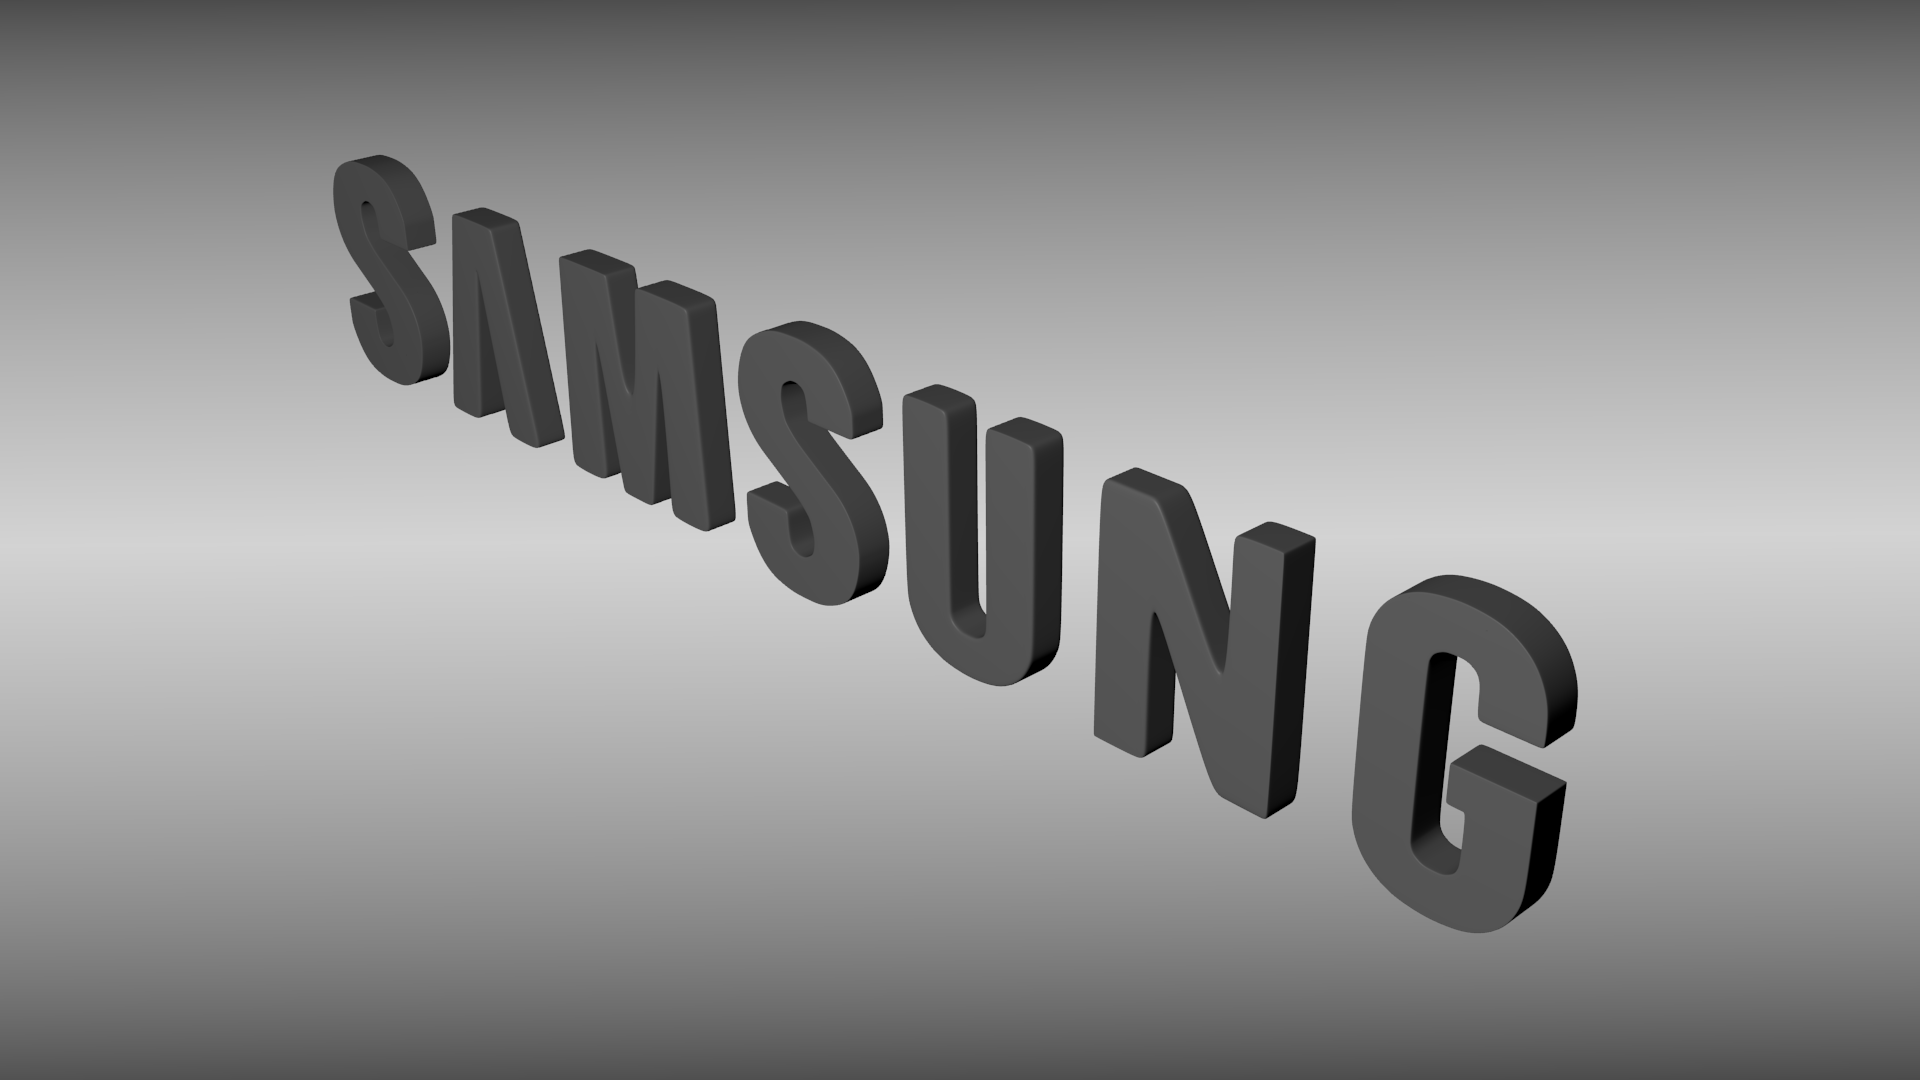  Samsung  Logo Wallpapers  PixelsTalk Net